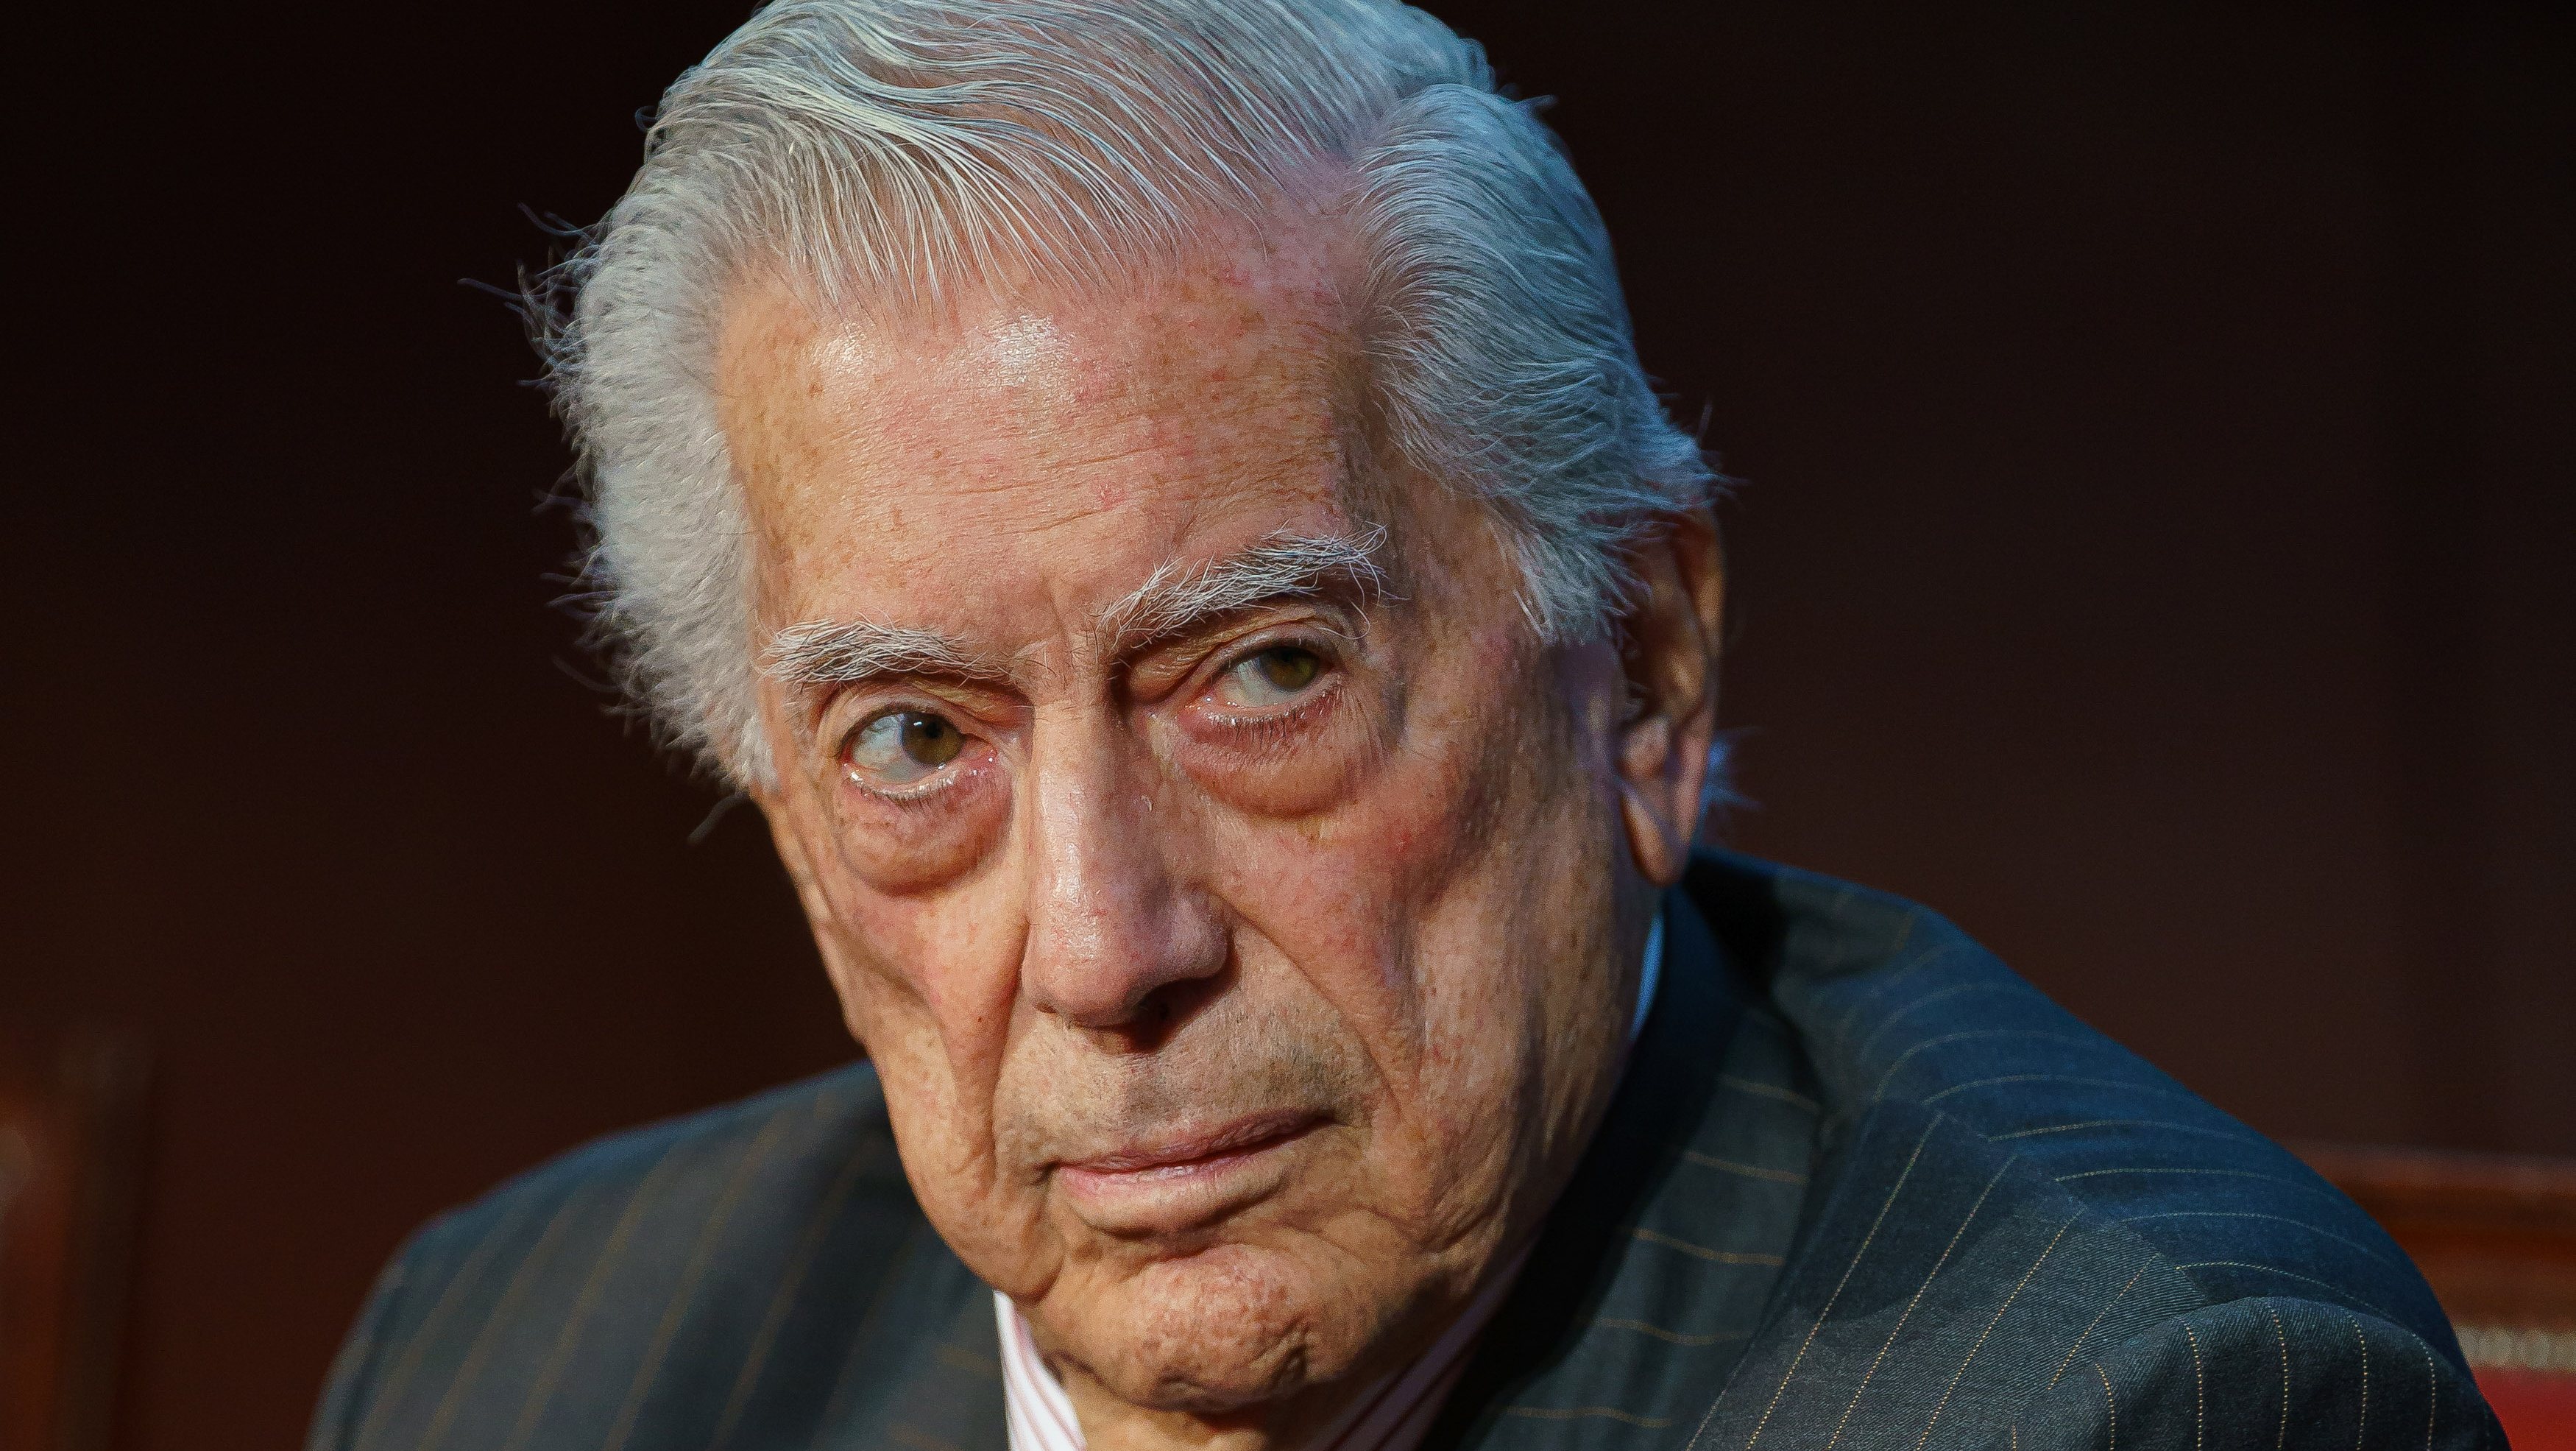 The writer and Nobel Prize winner Mario Vargas Llosa